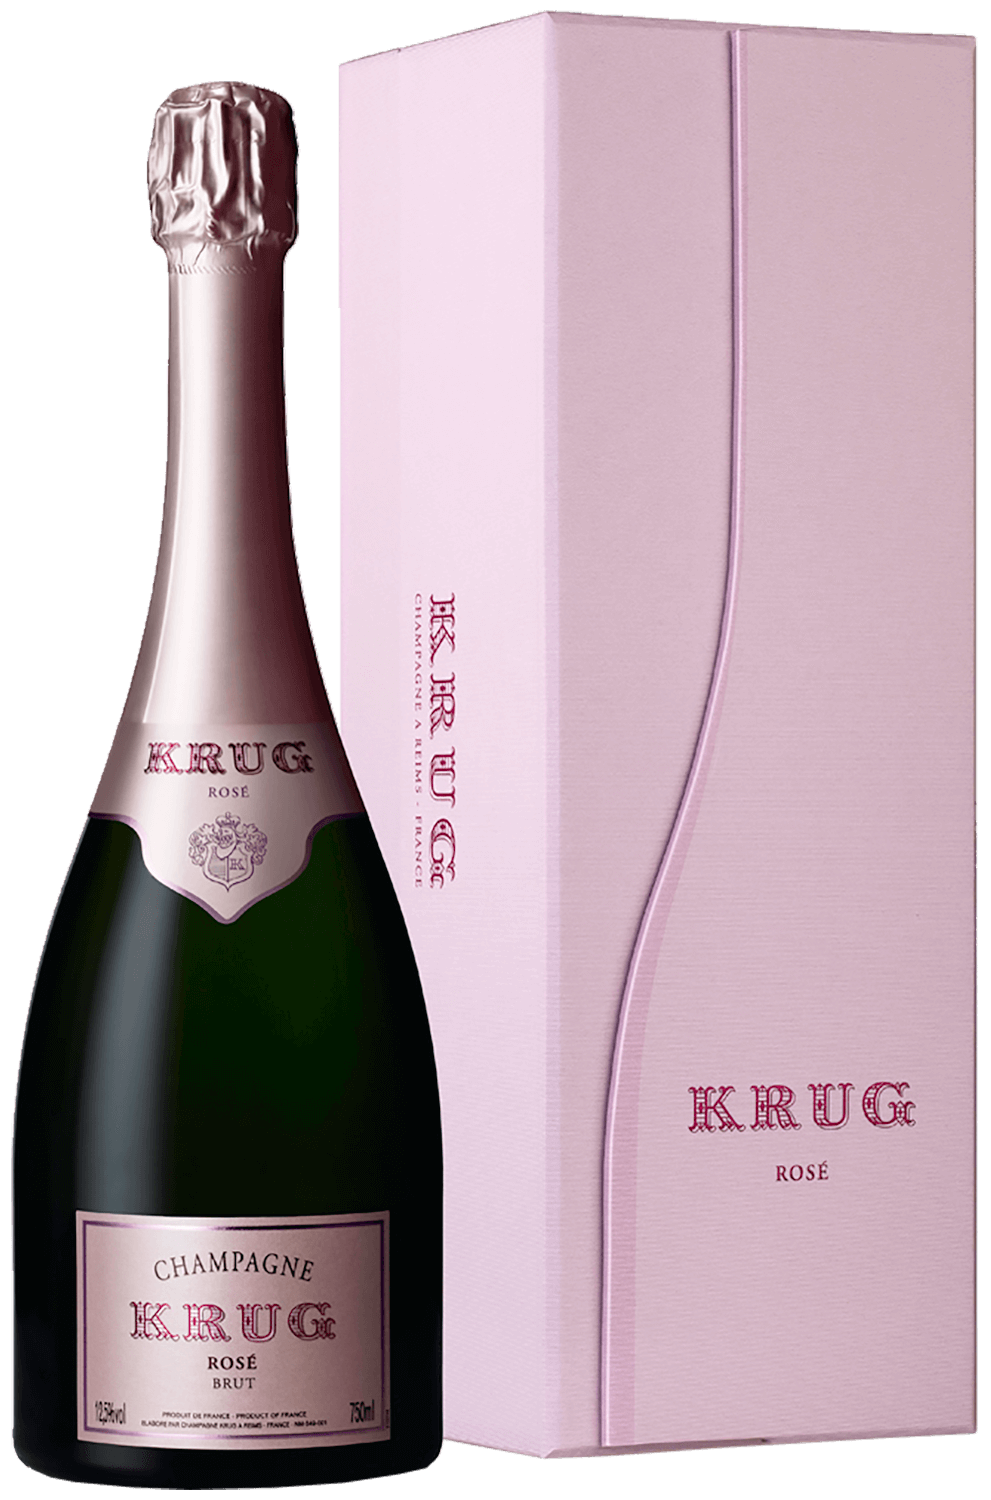 Krug Rose Brut Champagne AOC (in gift box) g h mumm grand cordon rose champagne aoc brut gift box